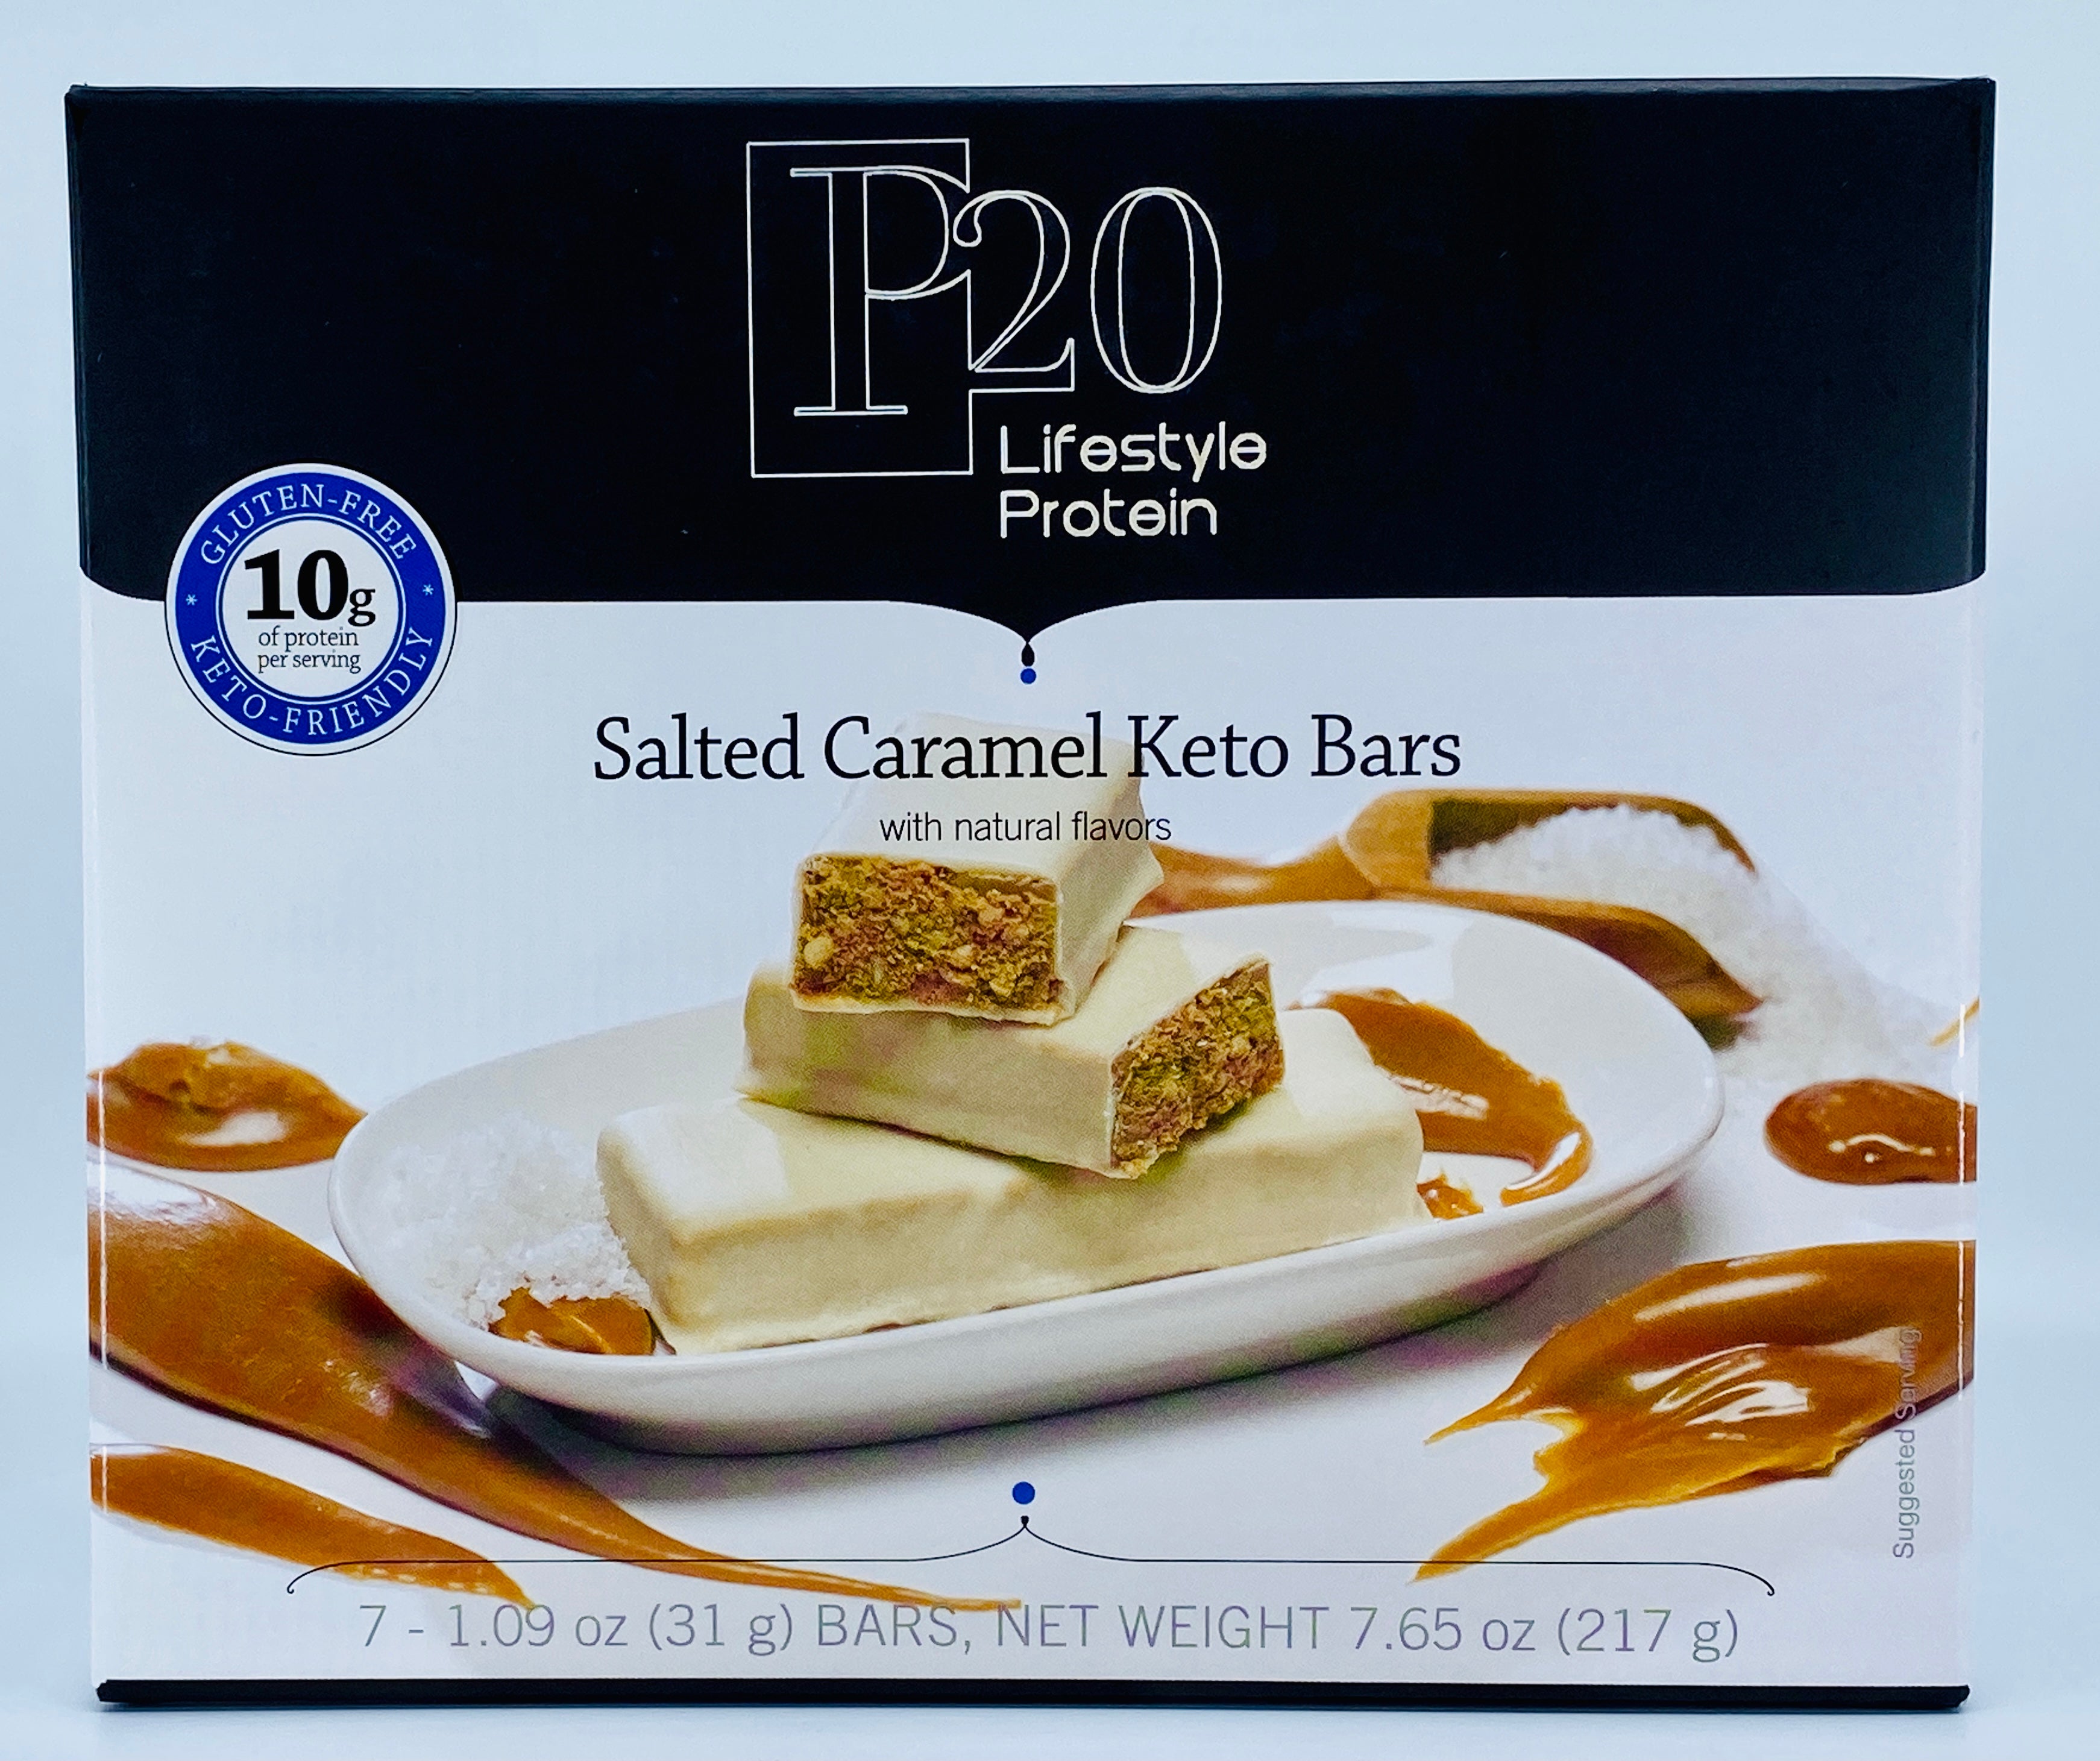 Salted Caramel Keto Bars - New Product